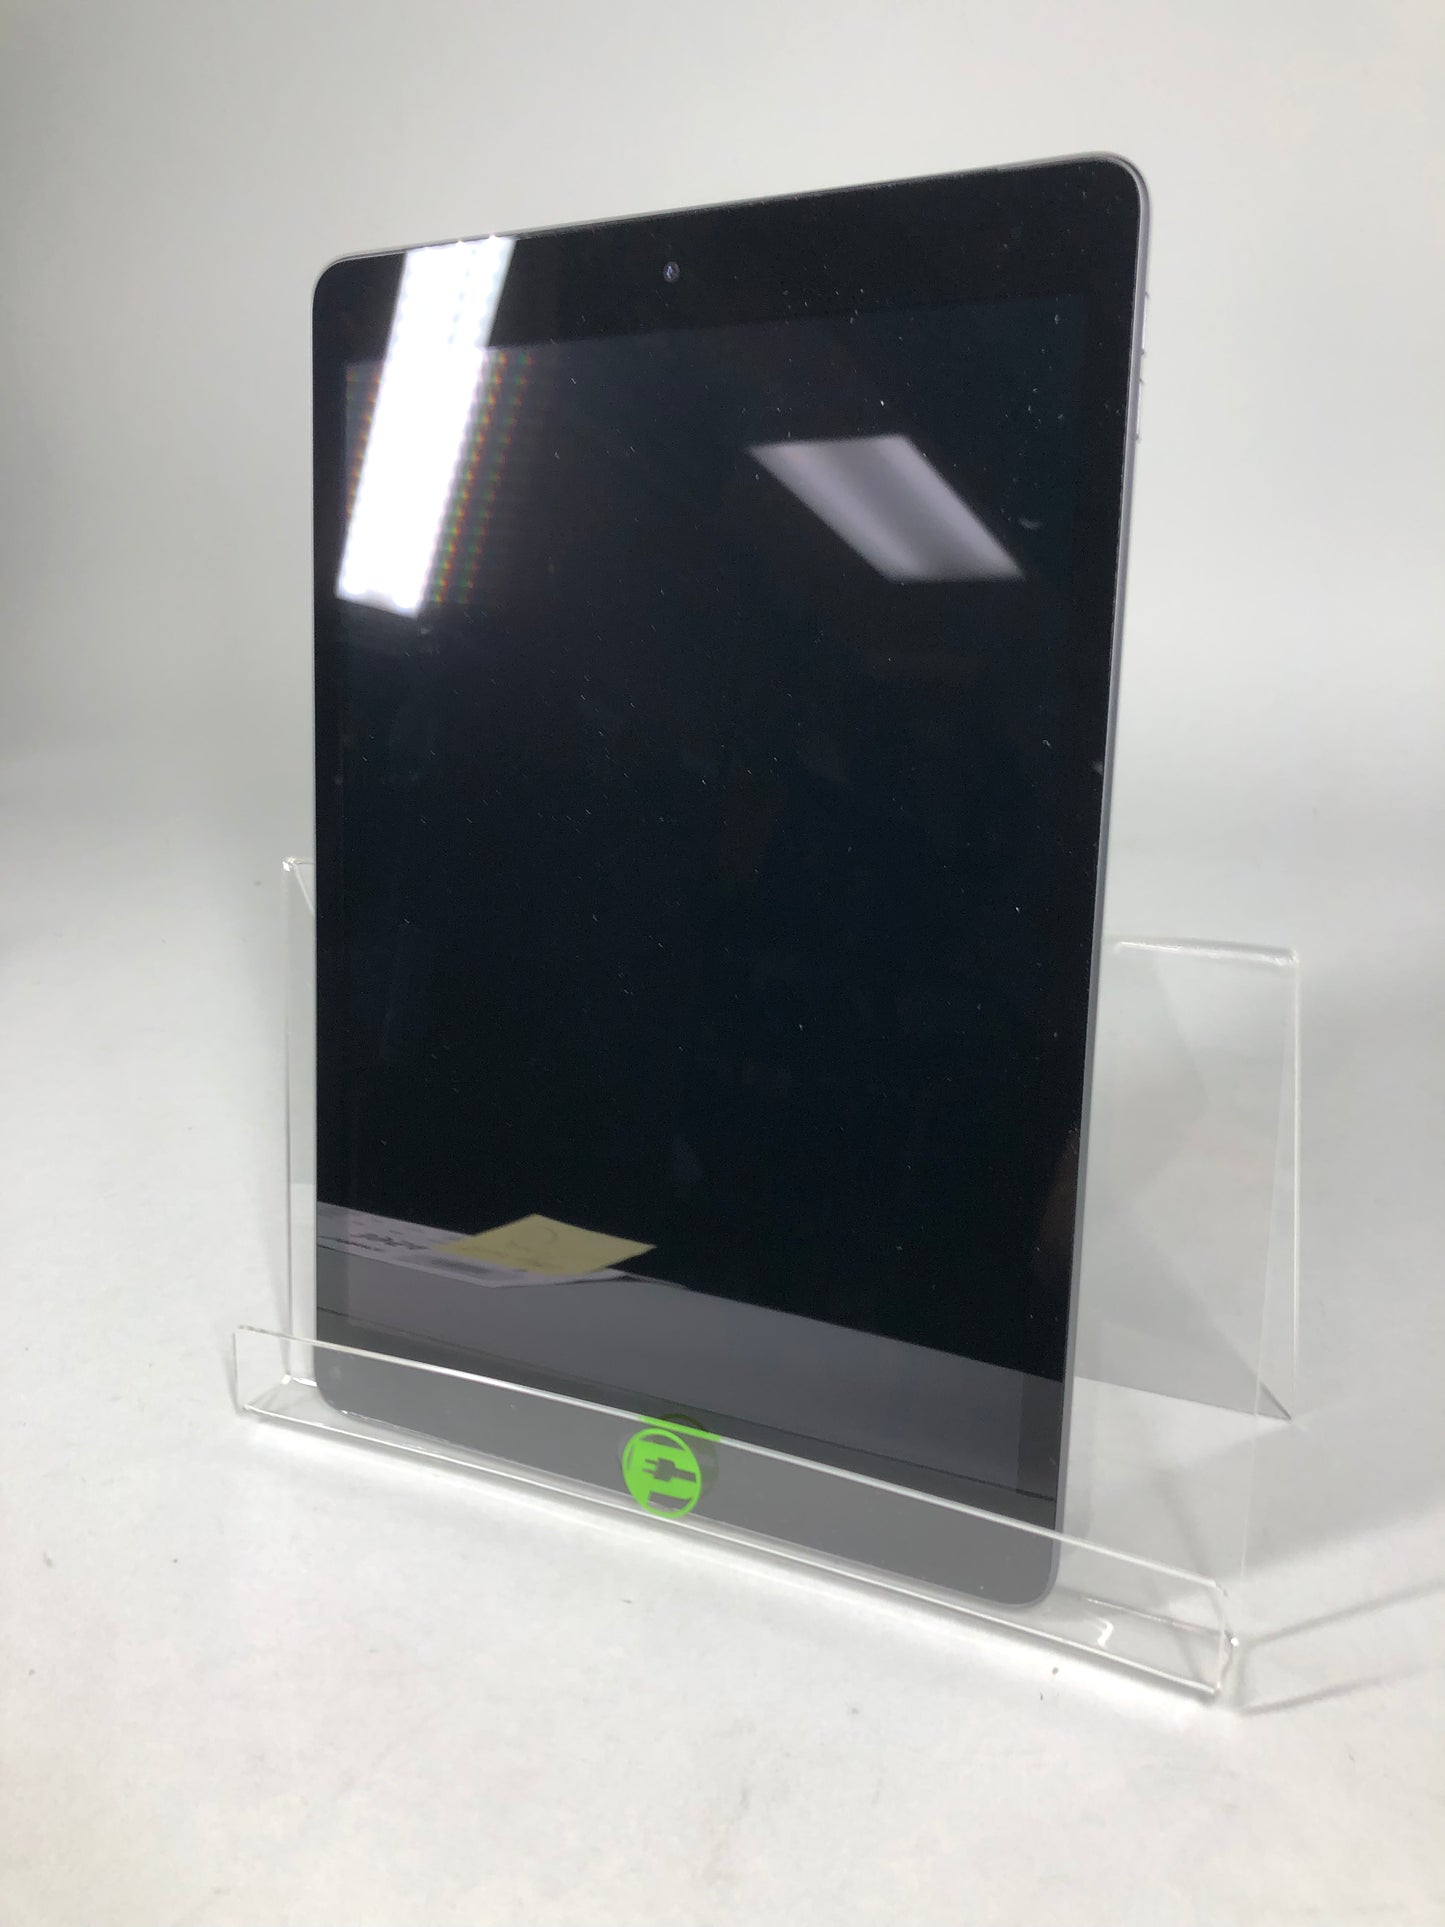 Factory Unlocked Apple iPad 9th Gen 64GB Space Gray MK663LL/A